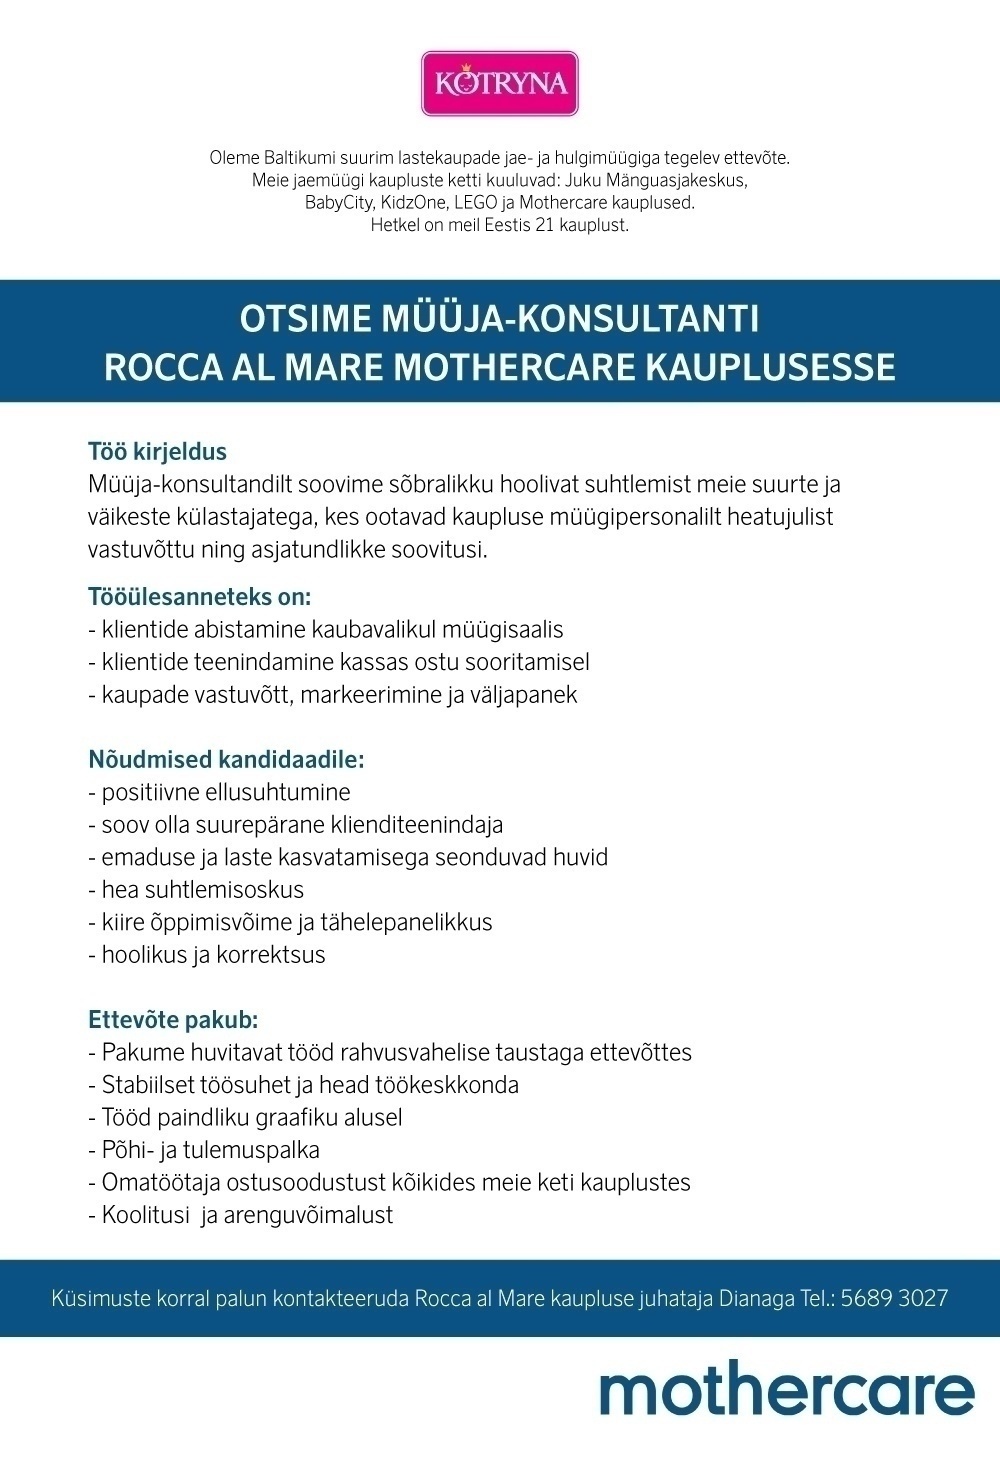 Kotryna OÜ Rocca al Mare Mothercare müüja-konsultant